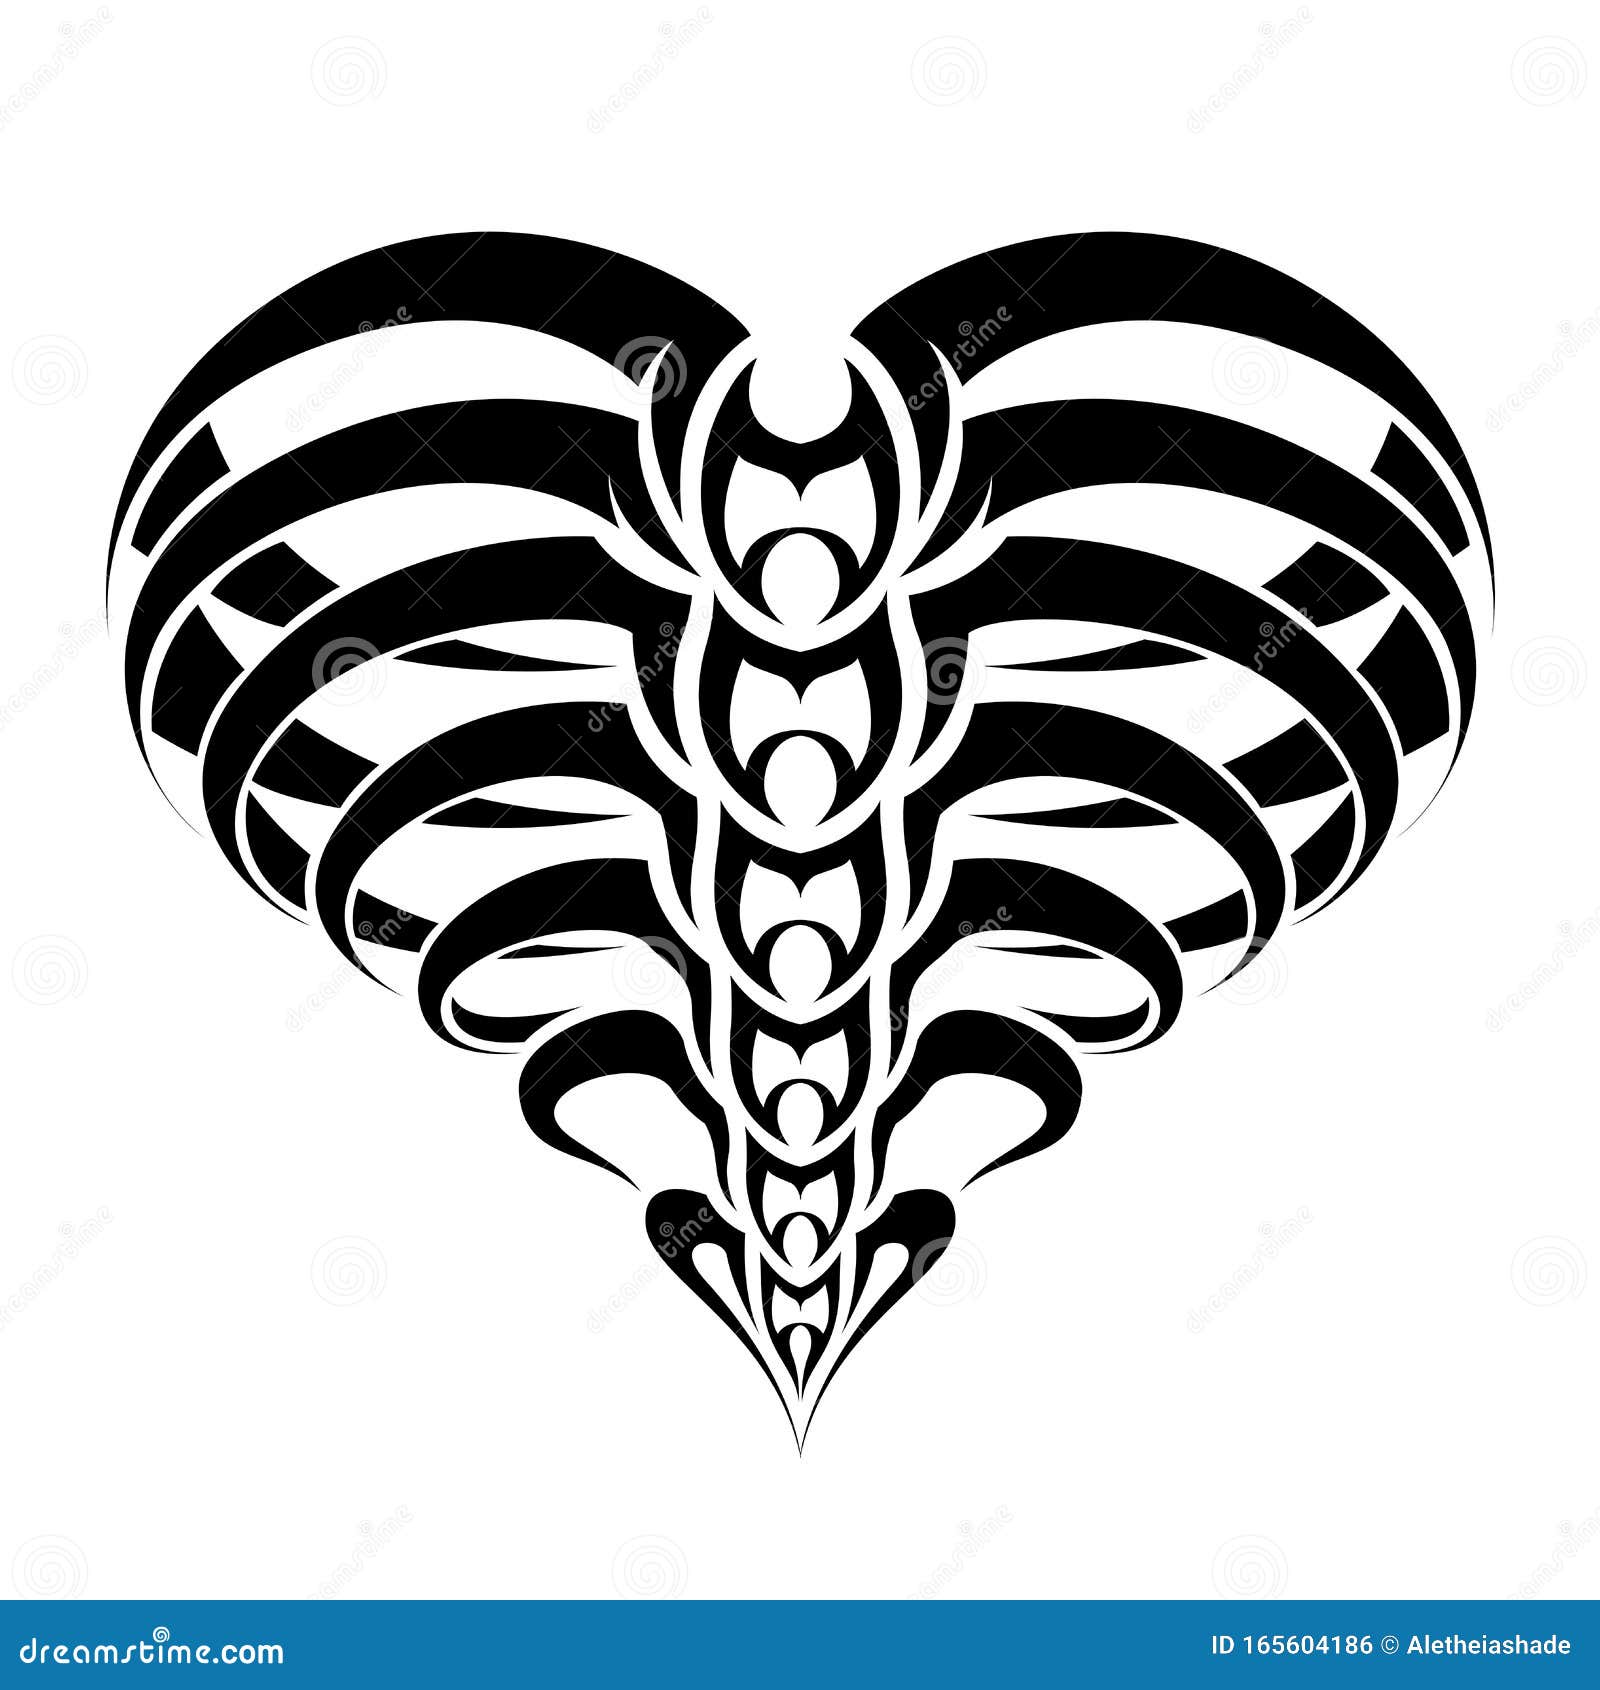 Heart tattoo located on the rib minimalistic style